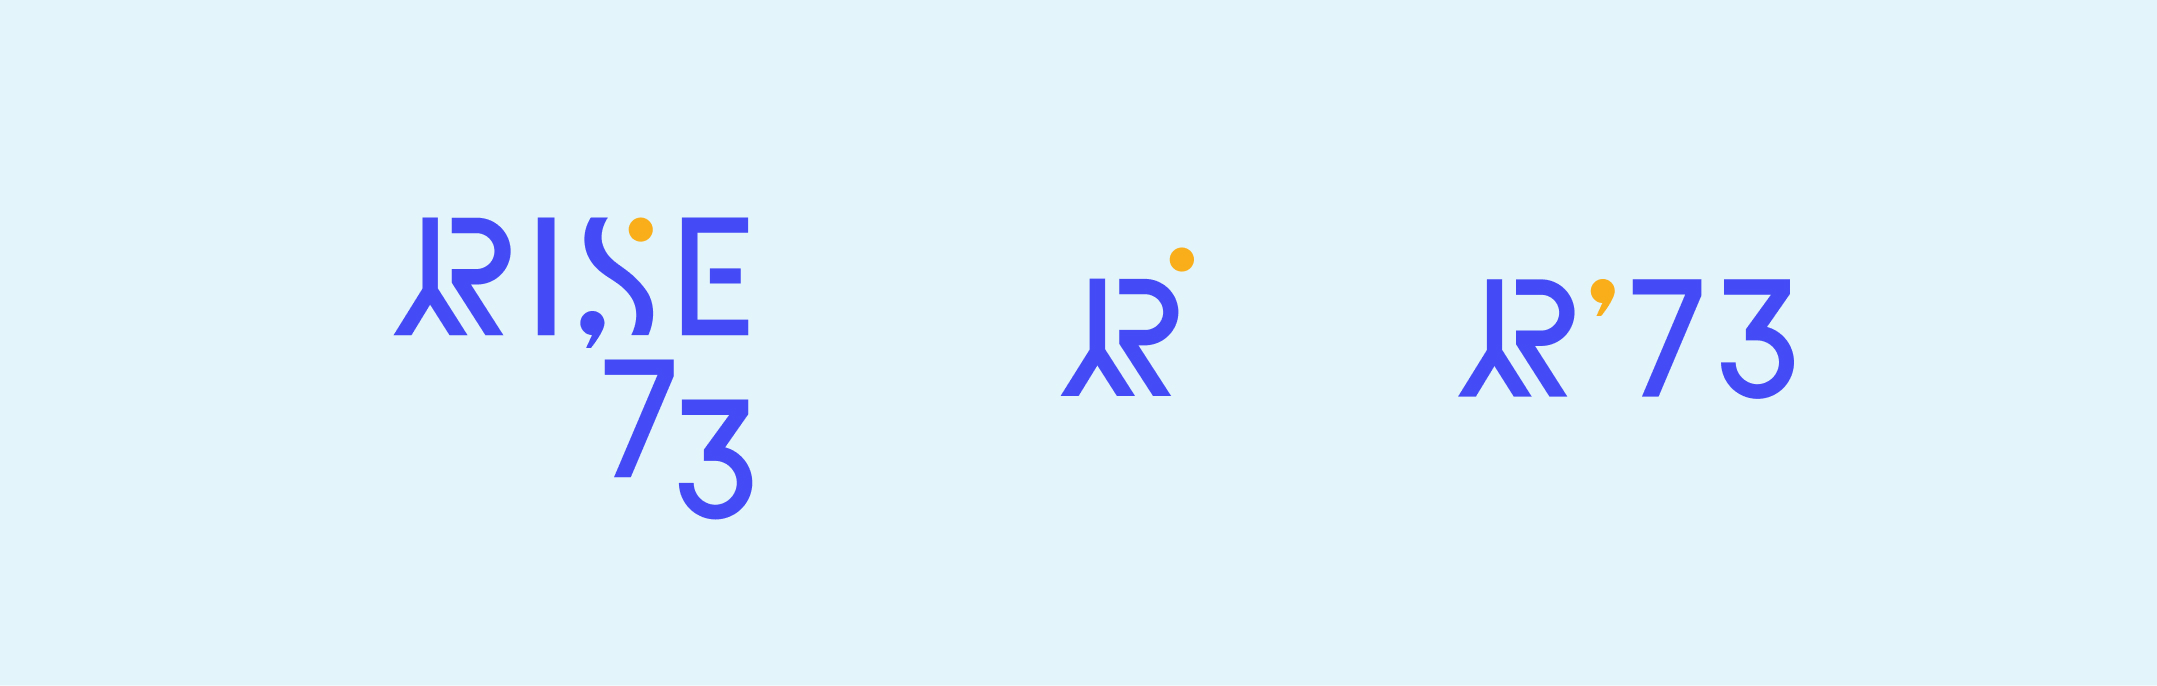 Rise 73 logos on light blue